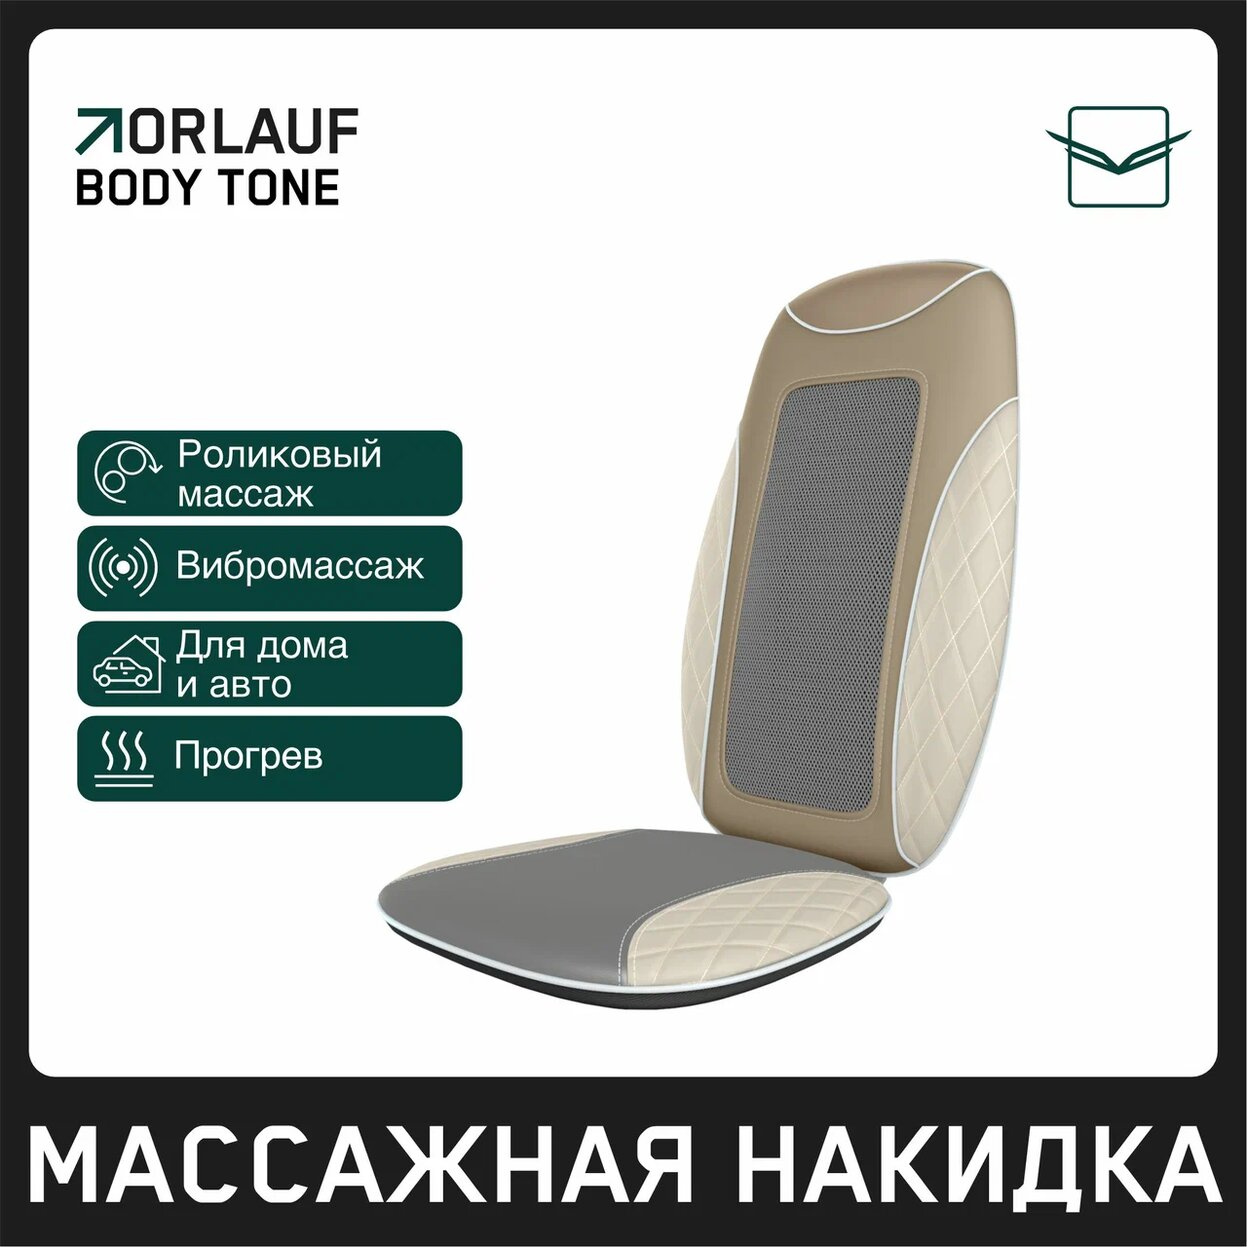 Orlauf Body Tone из каталога устройств для массажа в Тольятти по цене 15400 ₽